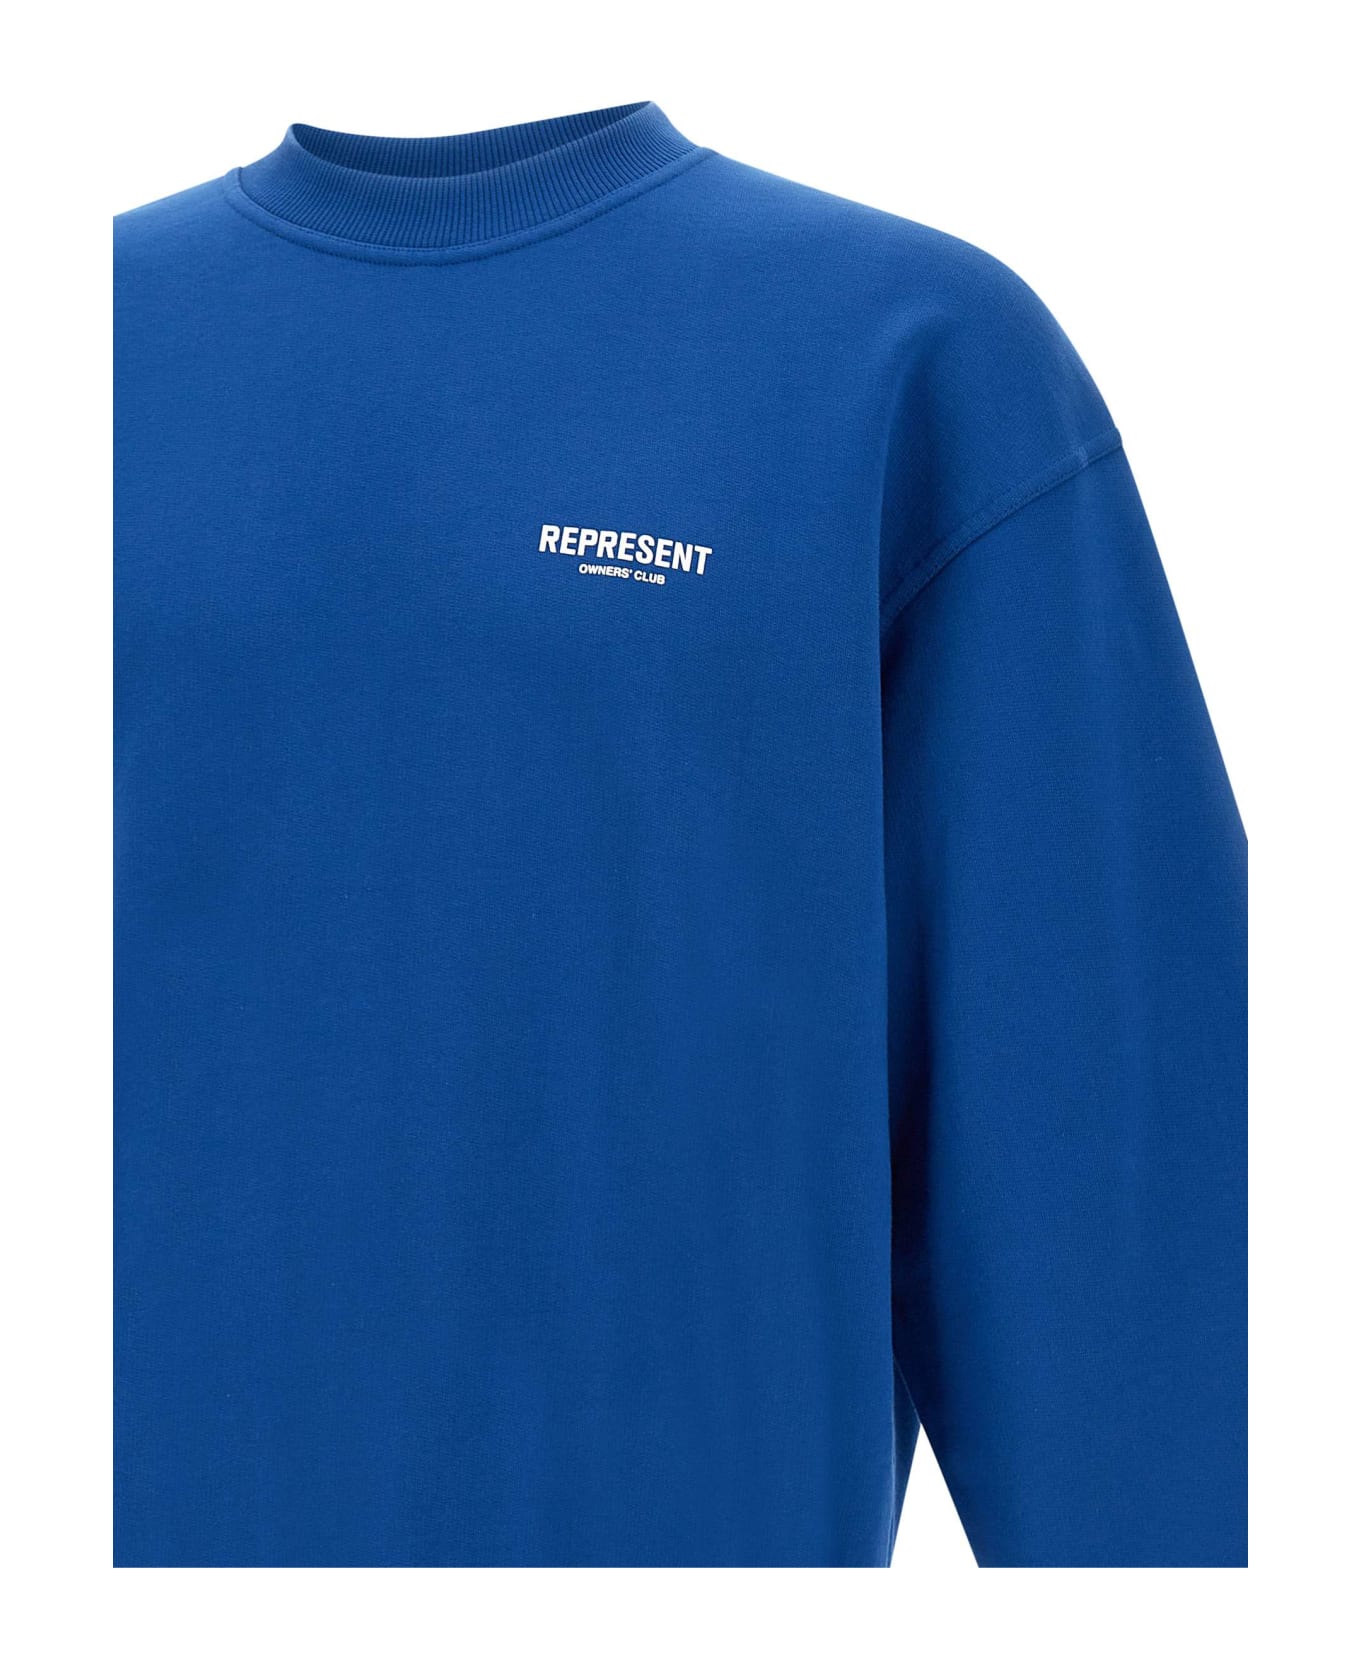 REPRESENT "owners Club" Cotton Sweatshirt - BLUE